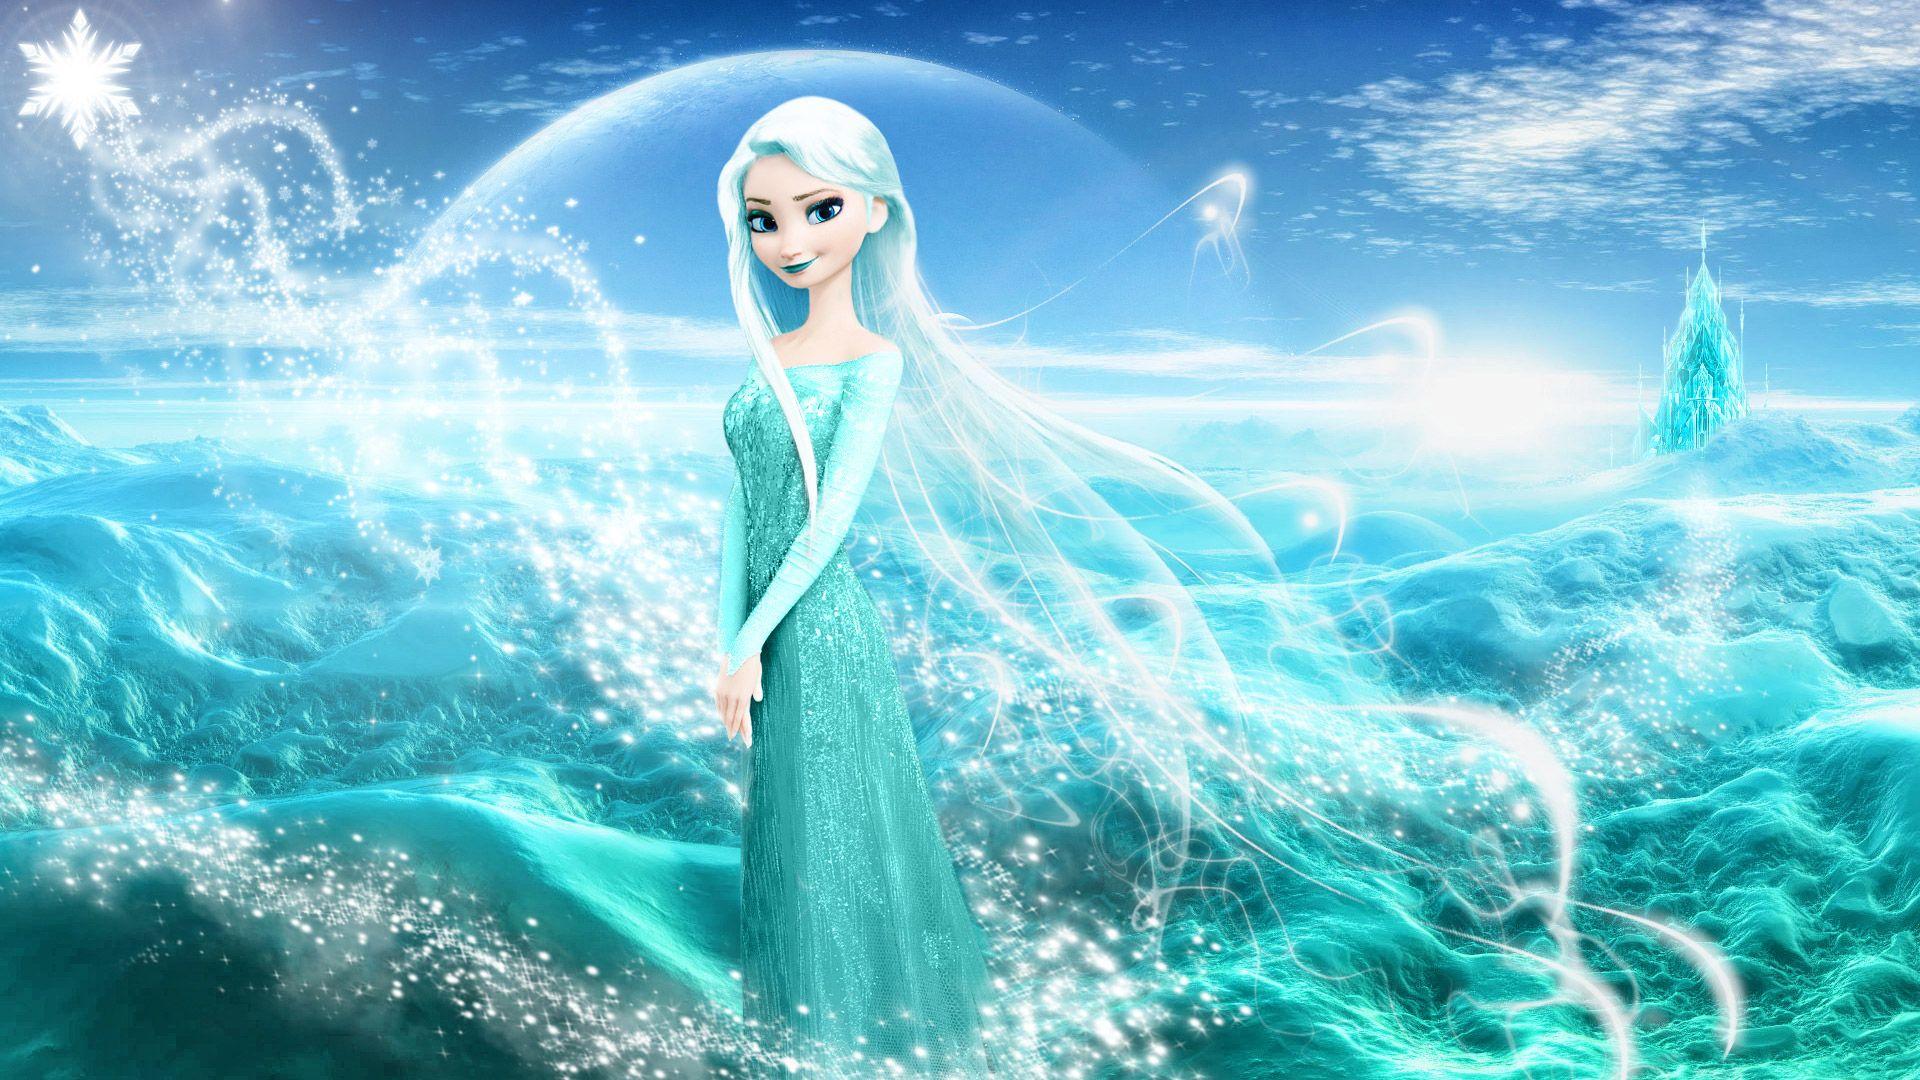 Elsa the Snow Queen Wallpaper The Snow Queen 2K wallpapers and